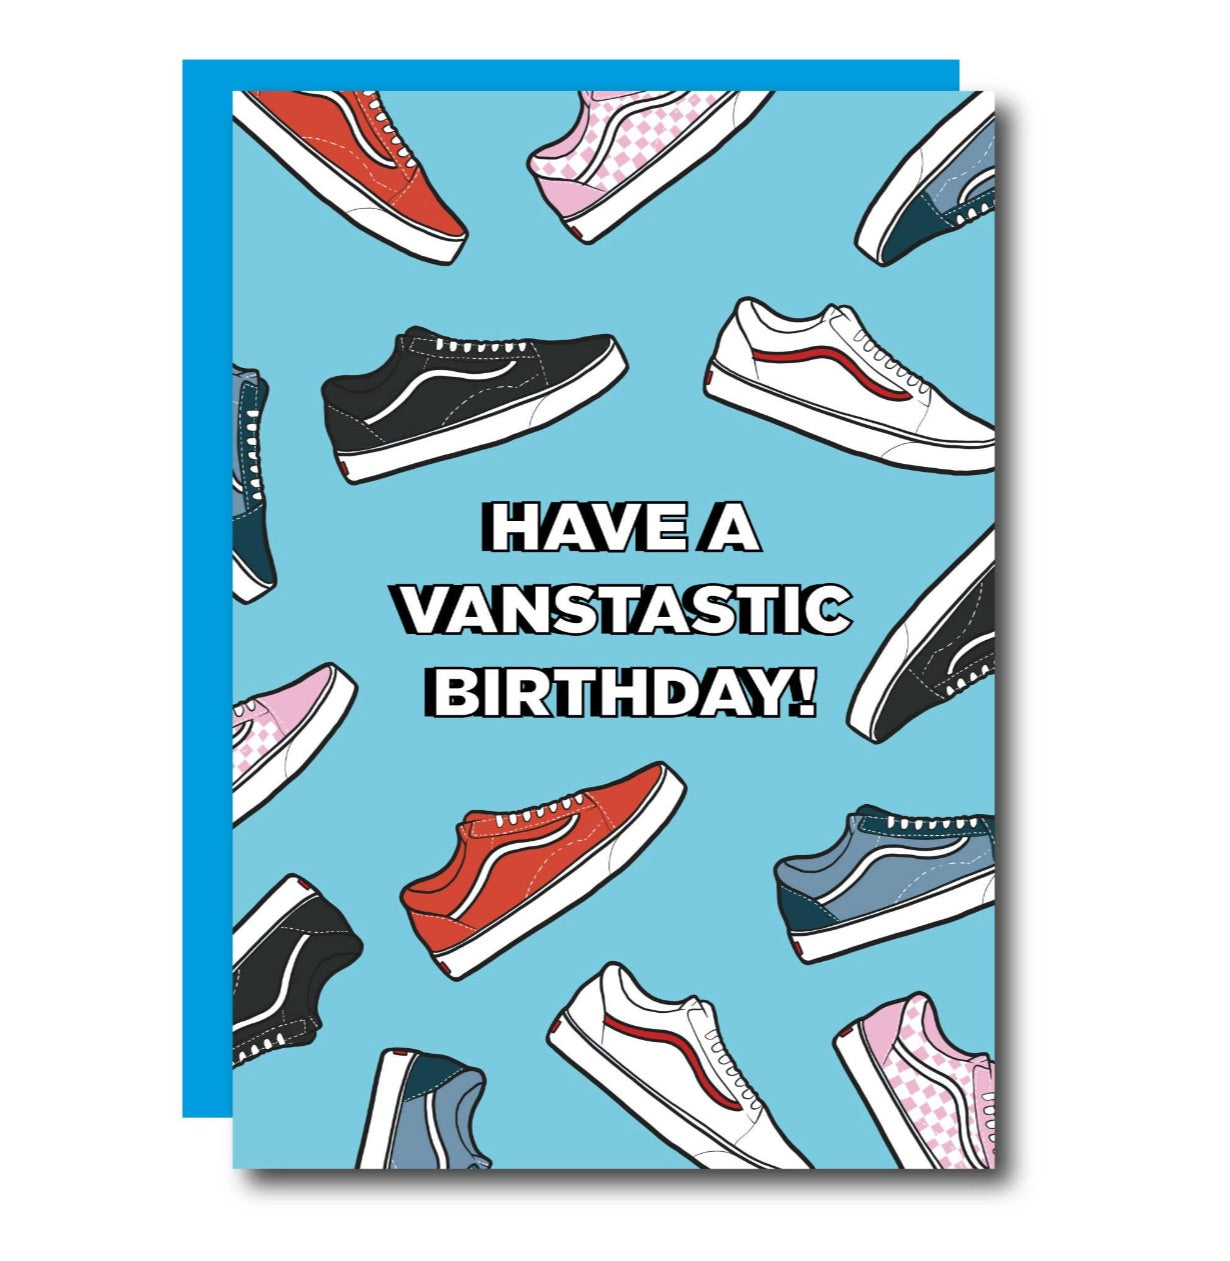 Van-tastic Birthday Card